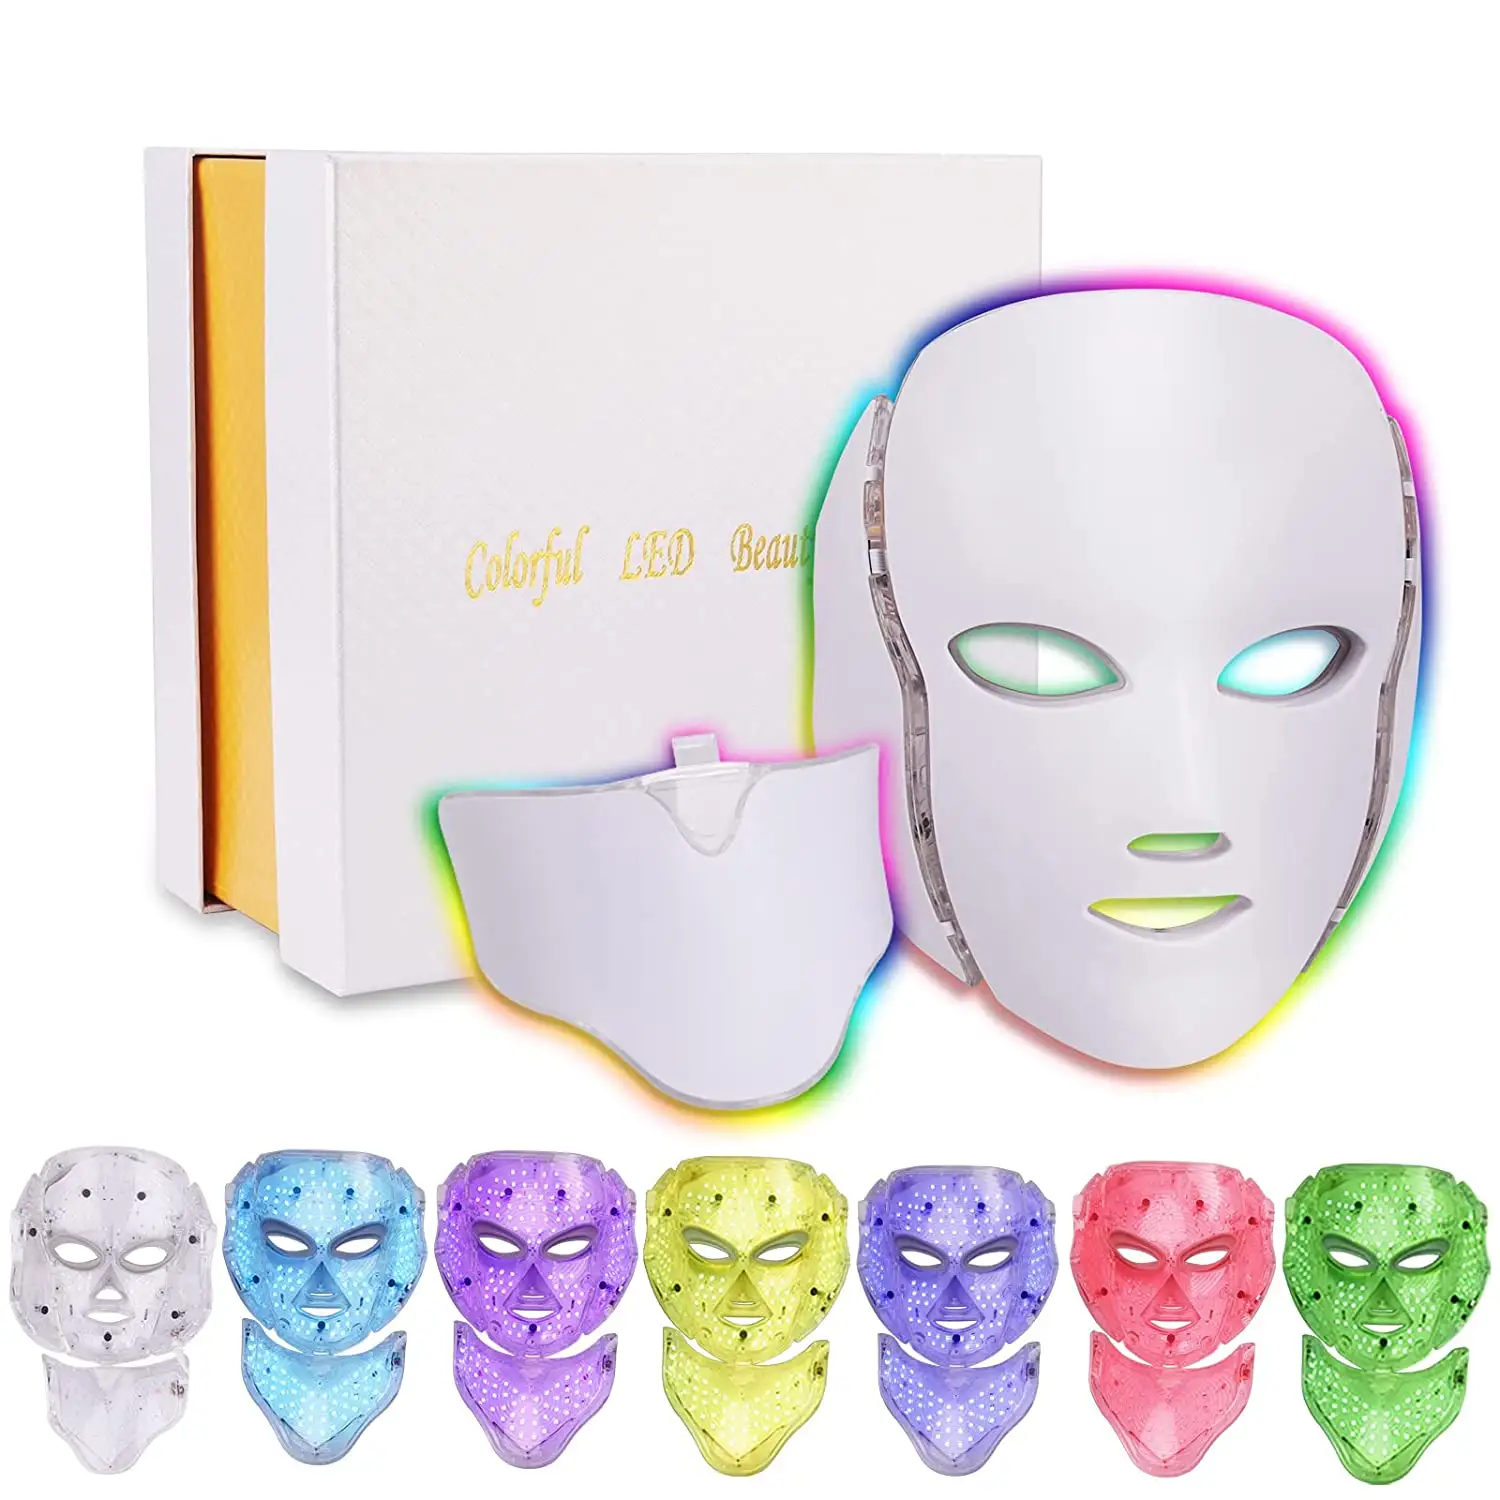 Masker Wajah LED Terapi 7 Warna, Masker Terapi Peremajaan Kulit LED, Masker Foton Wajah Anti Penuaan Mengencangkan Kulit Keriput